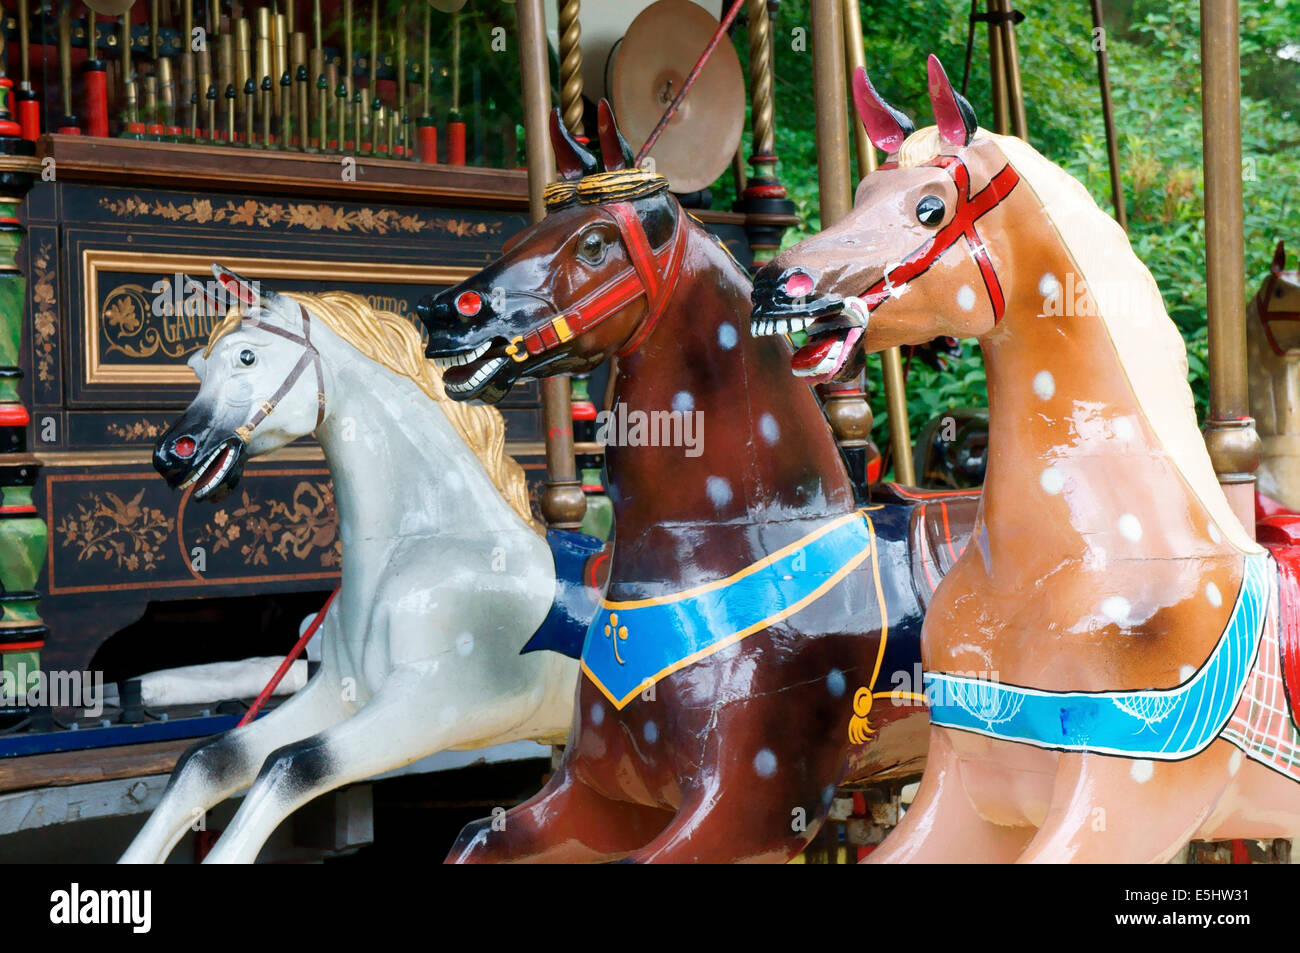 Fairground horses, gallopers on a merry go round carousel Stock Photo